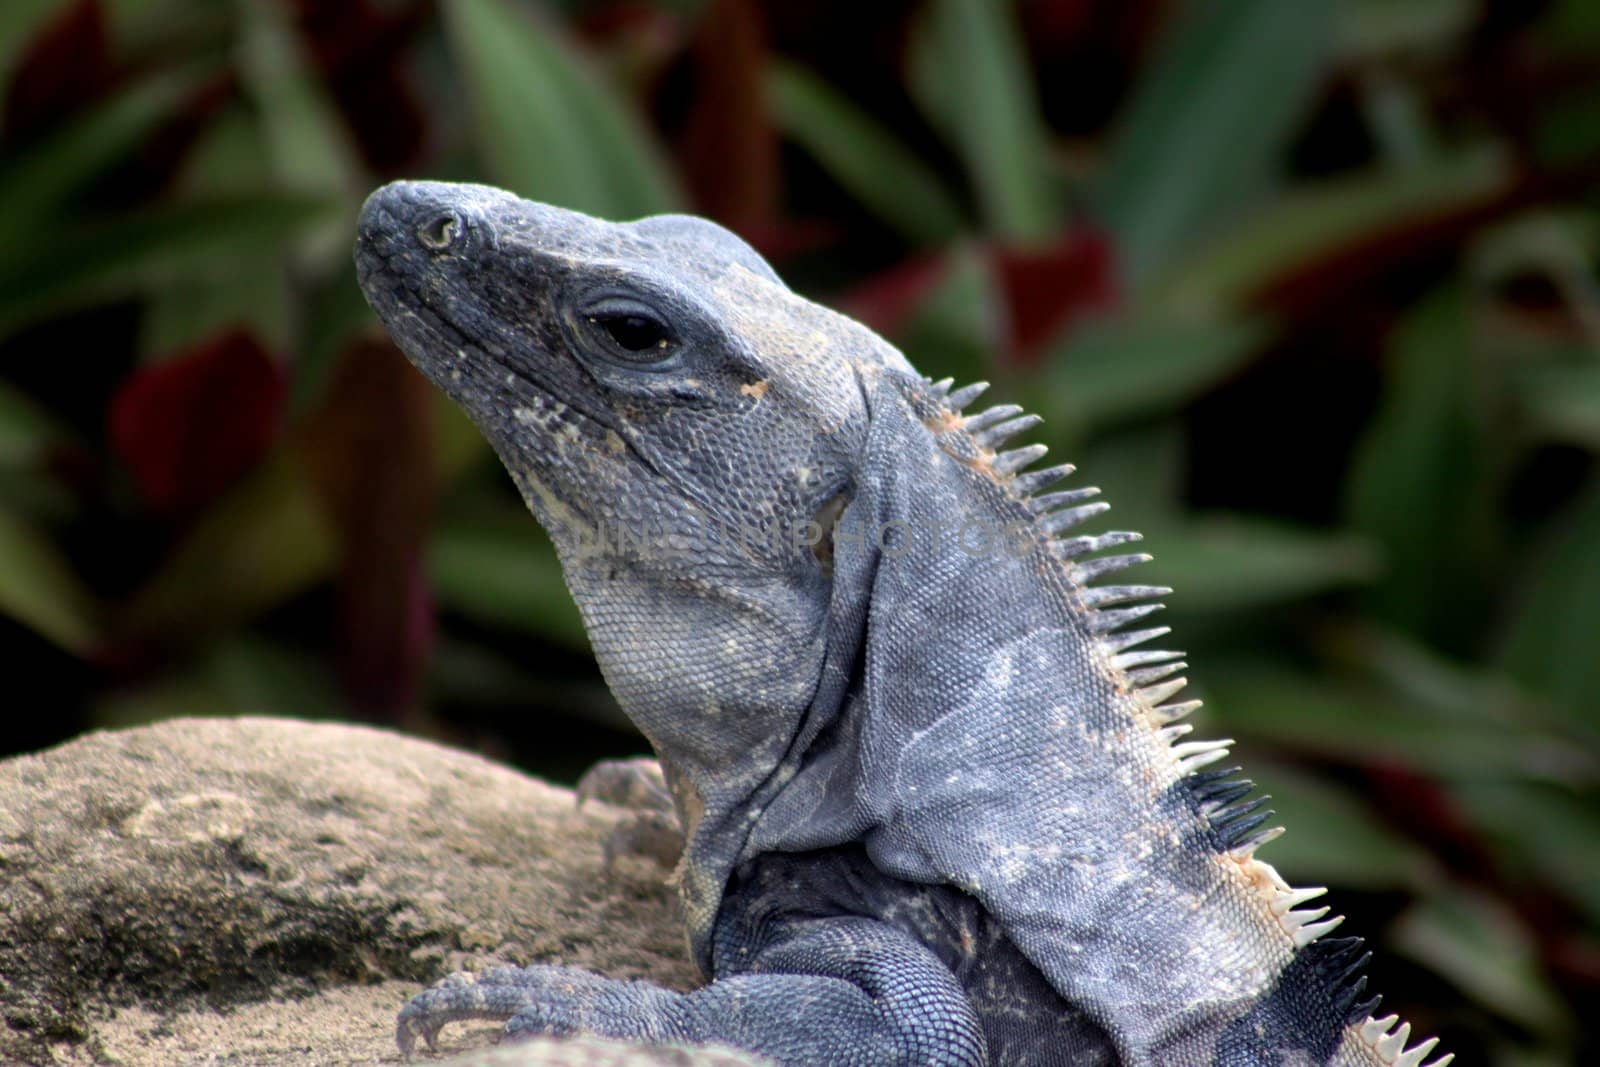 Close up profile of a grey lizard's head